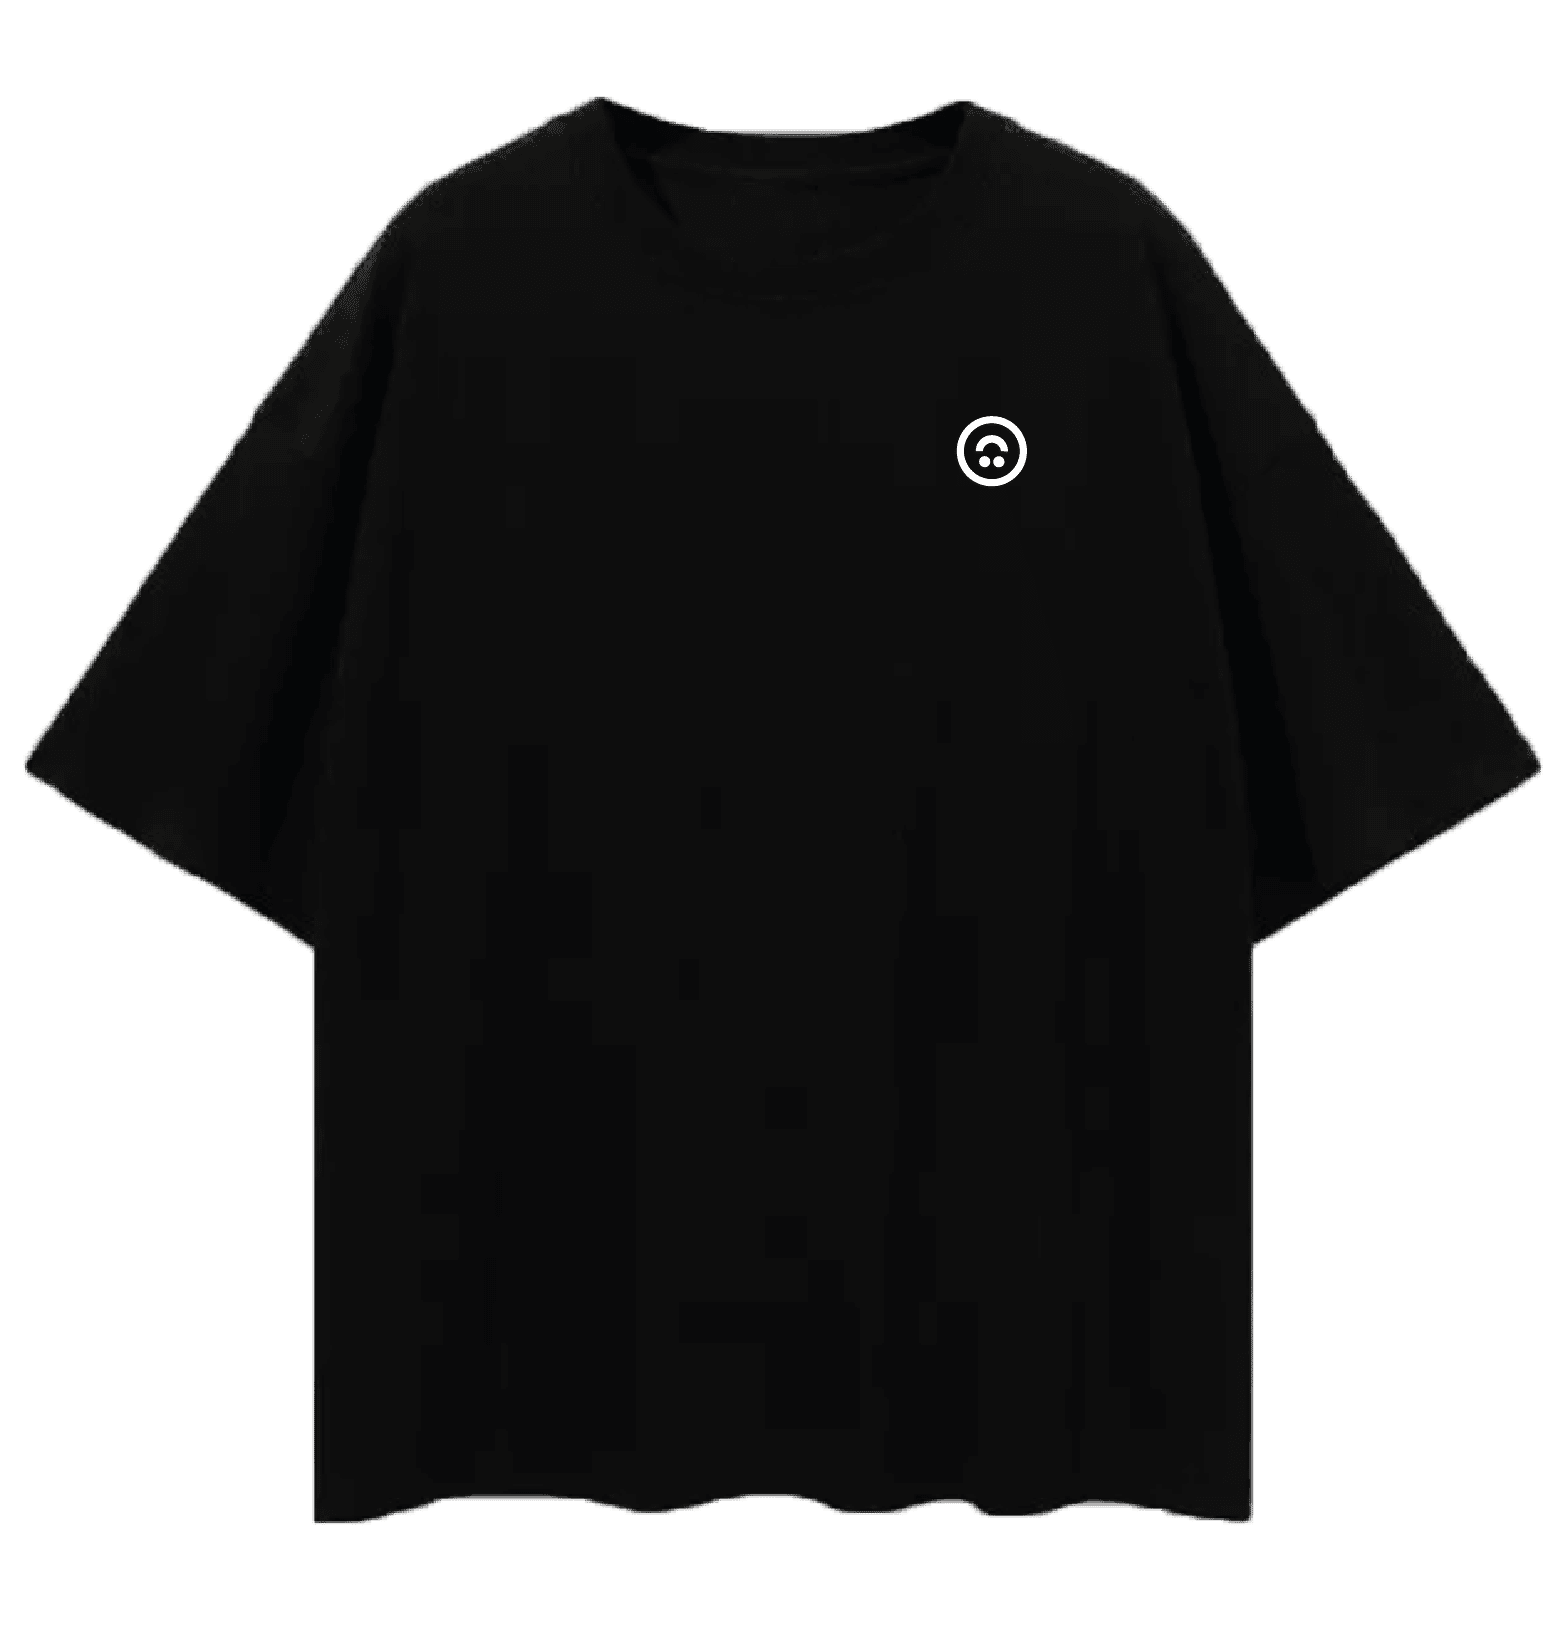 JOH-T-shirt-Black-Smiley logo